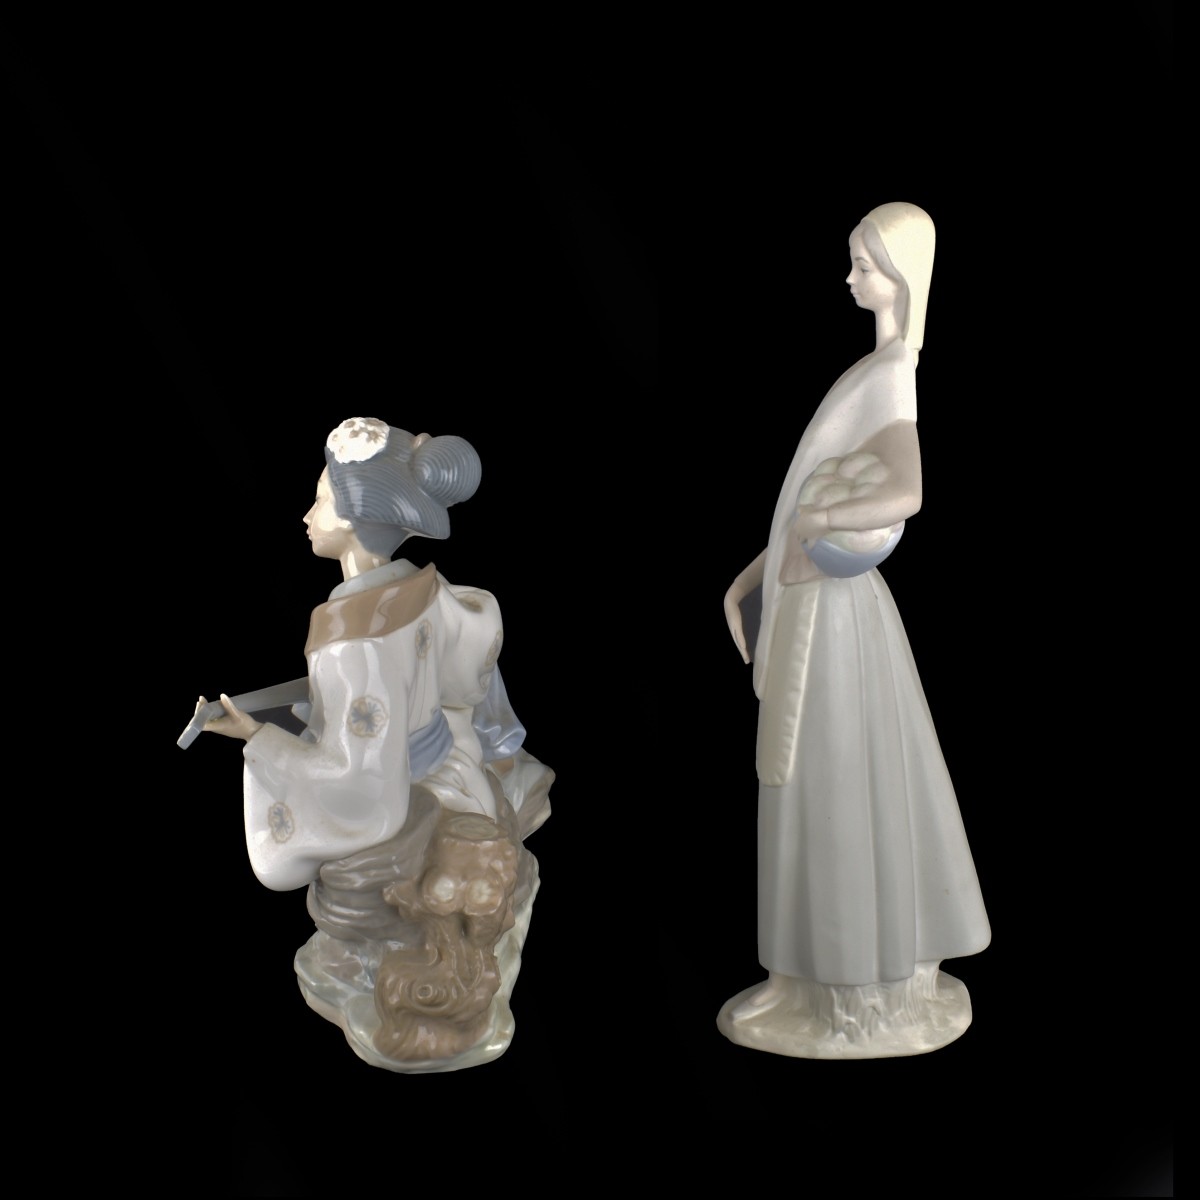 Lladro Style Figurines